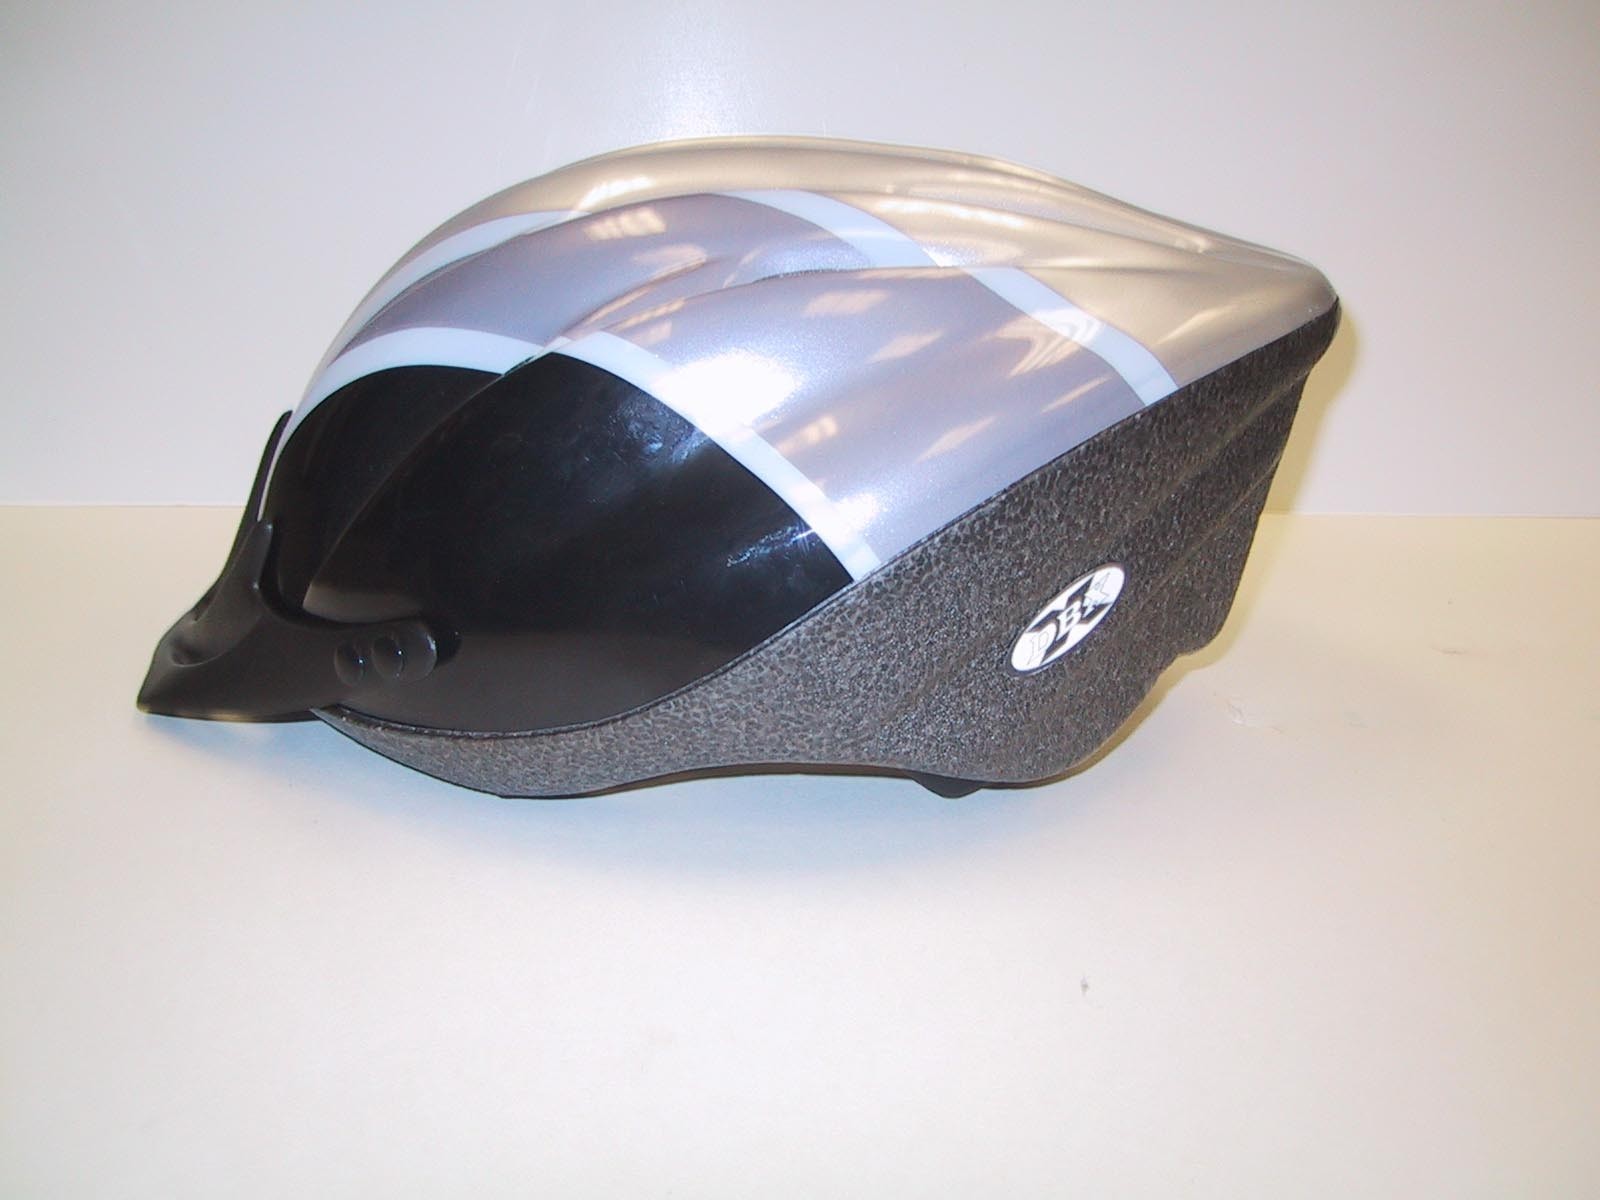 Picture of Recalled Geartec ESPY bicycle helmets